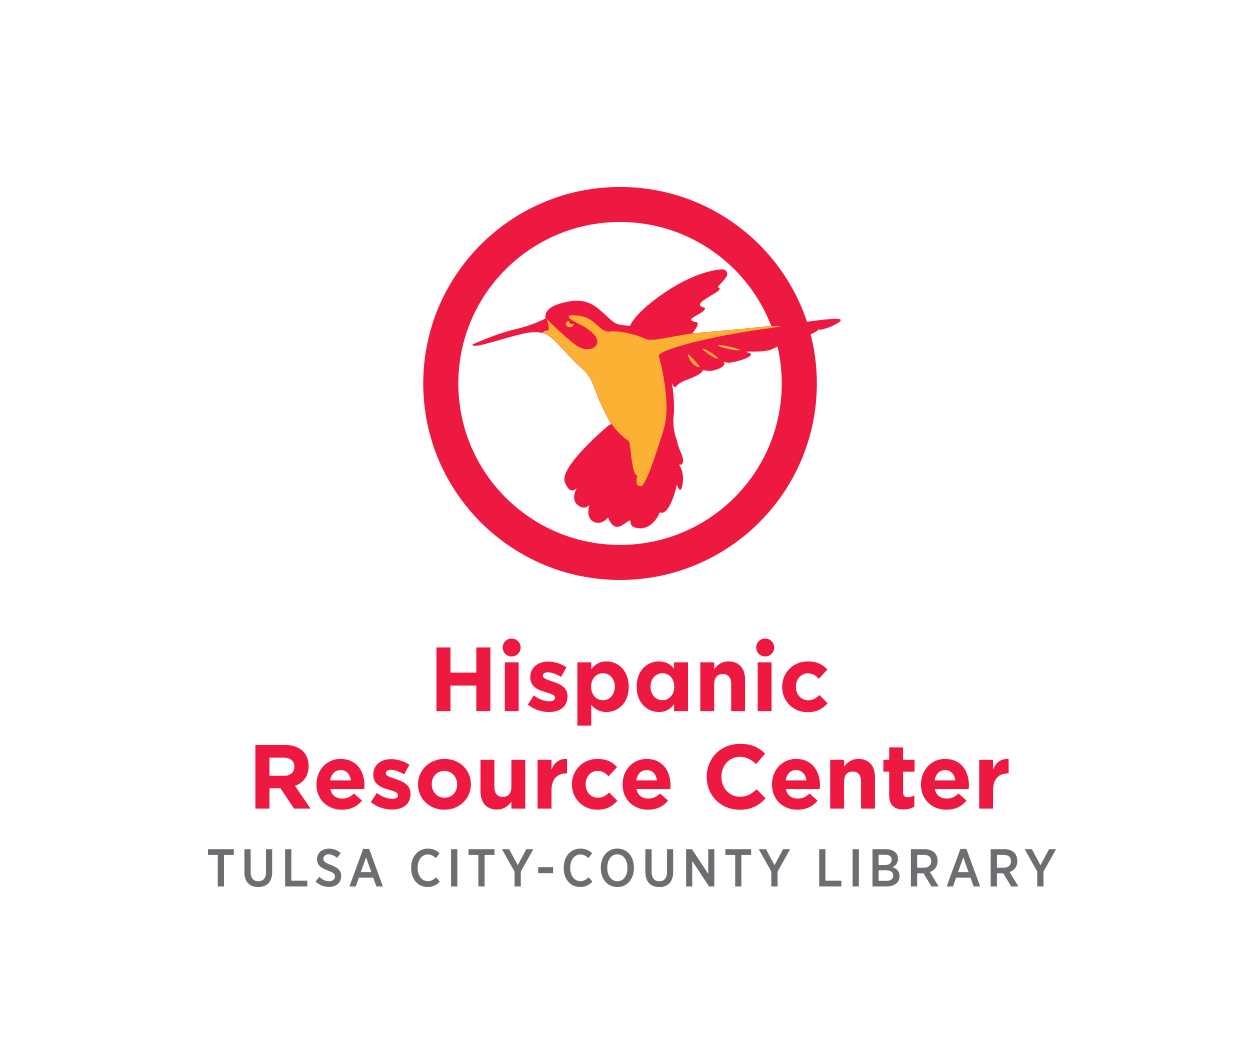 Hispanic Logo - Hispanic Resource Center. Tulsa Library